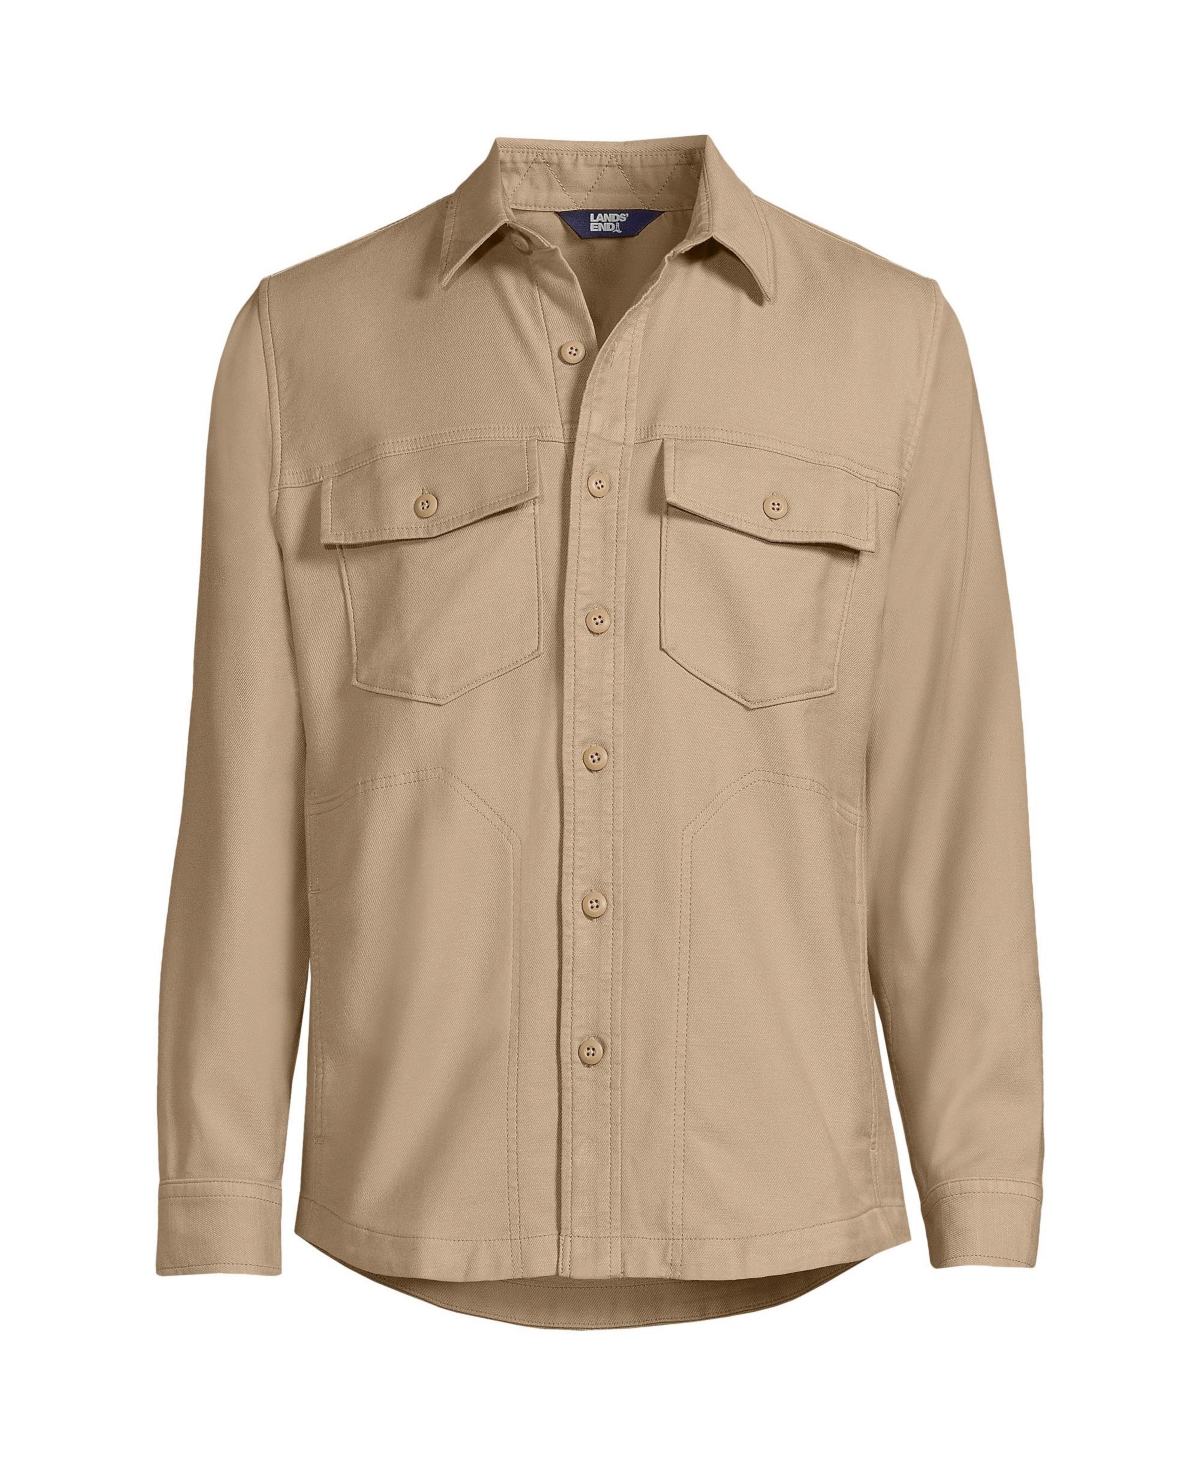 Men's Long Sleeve French Terry Shirt Jacket - Desert tan